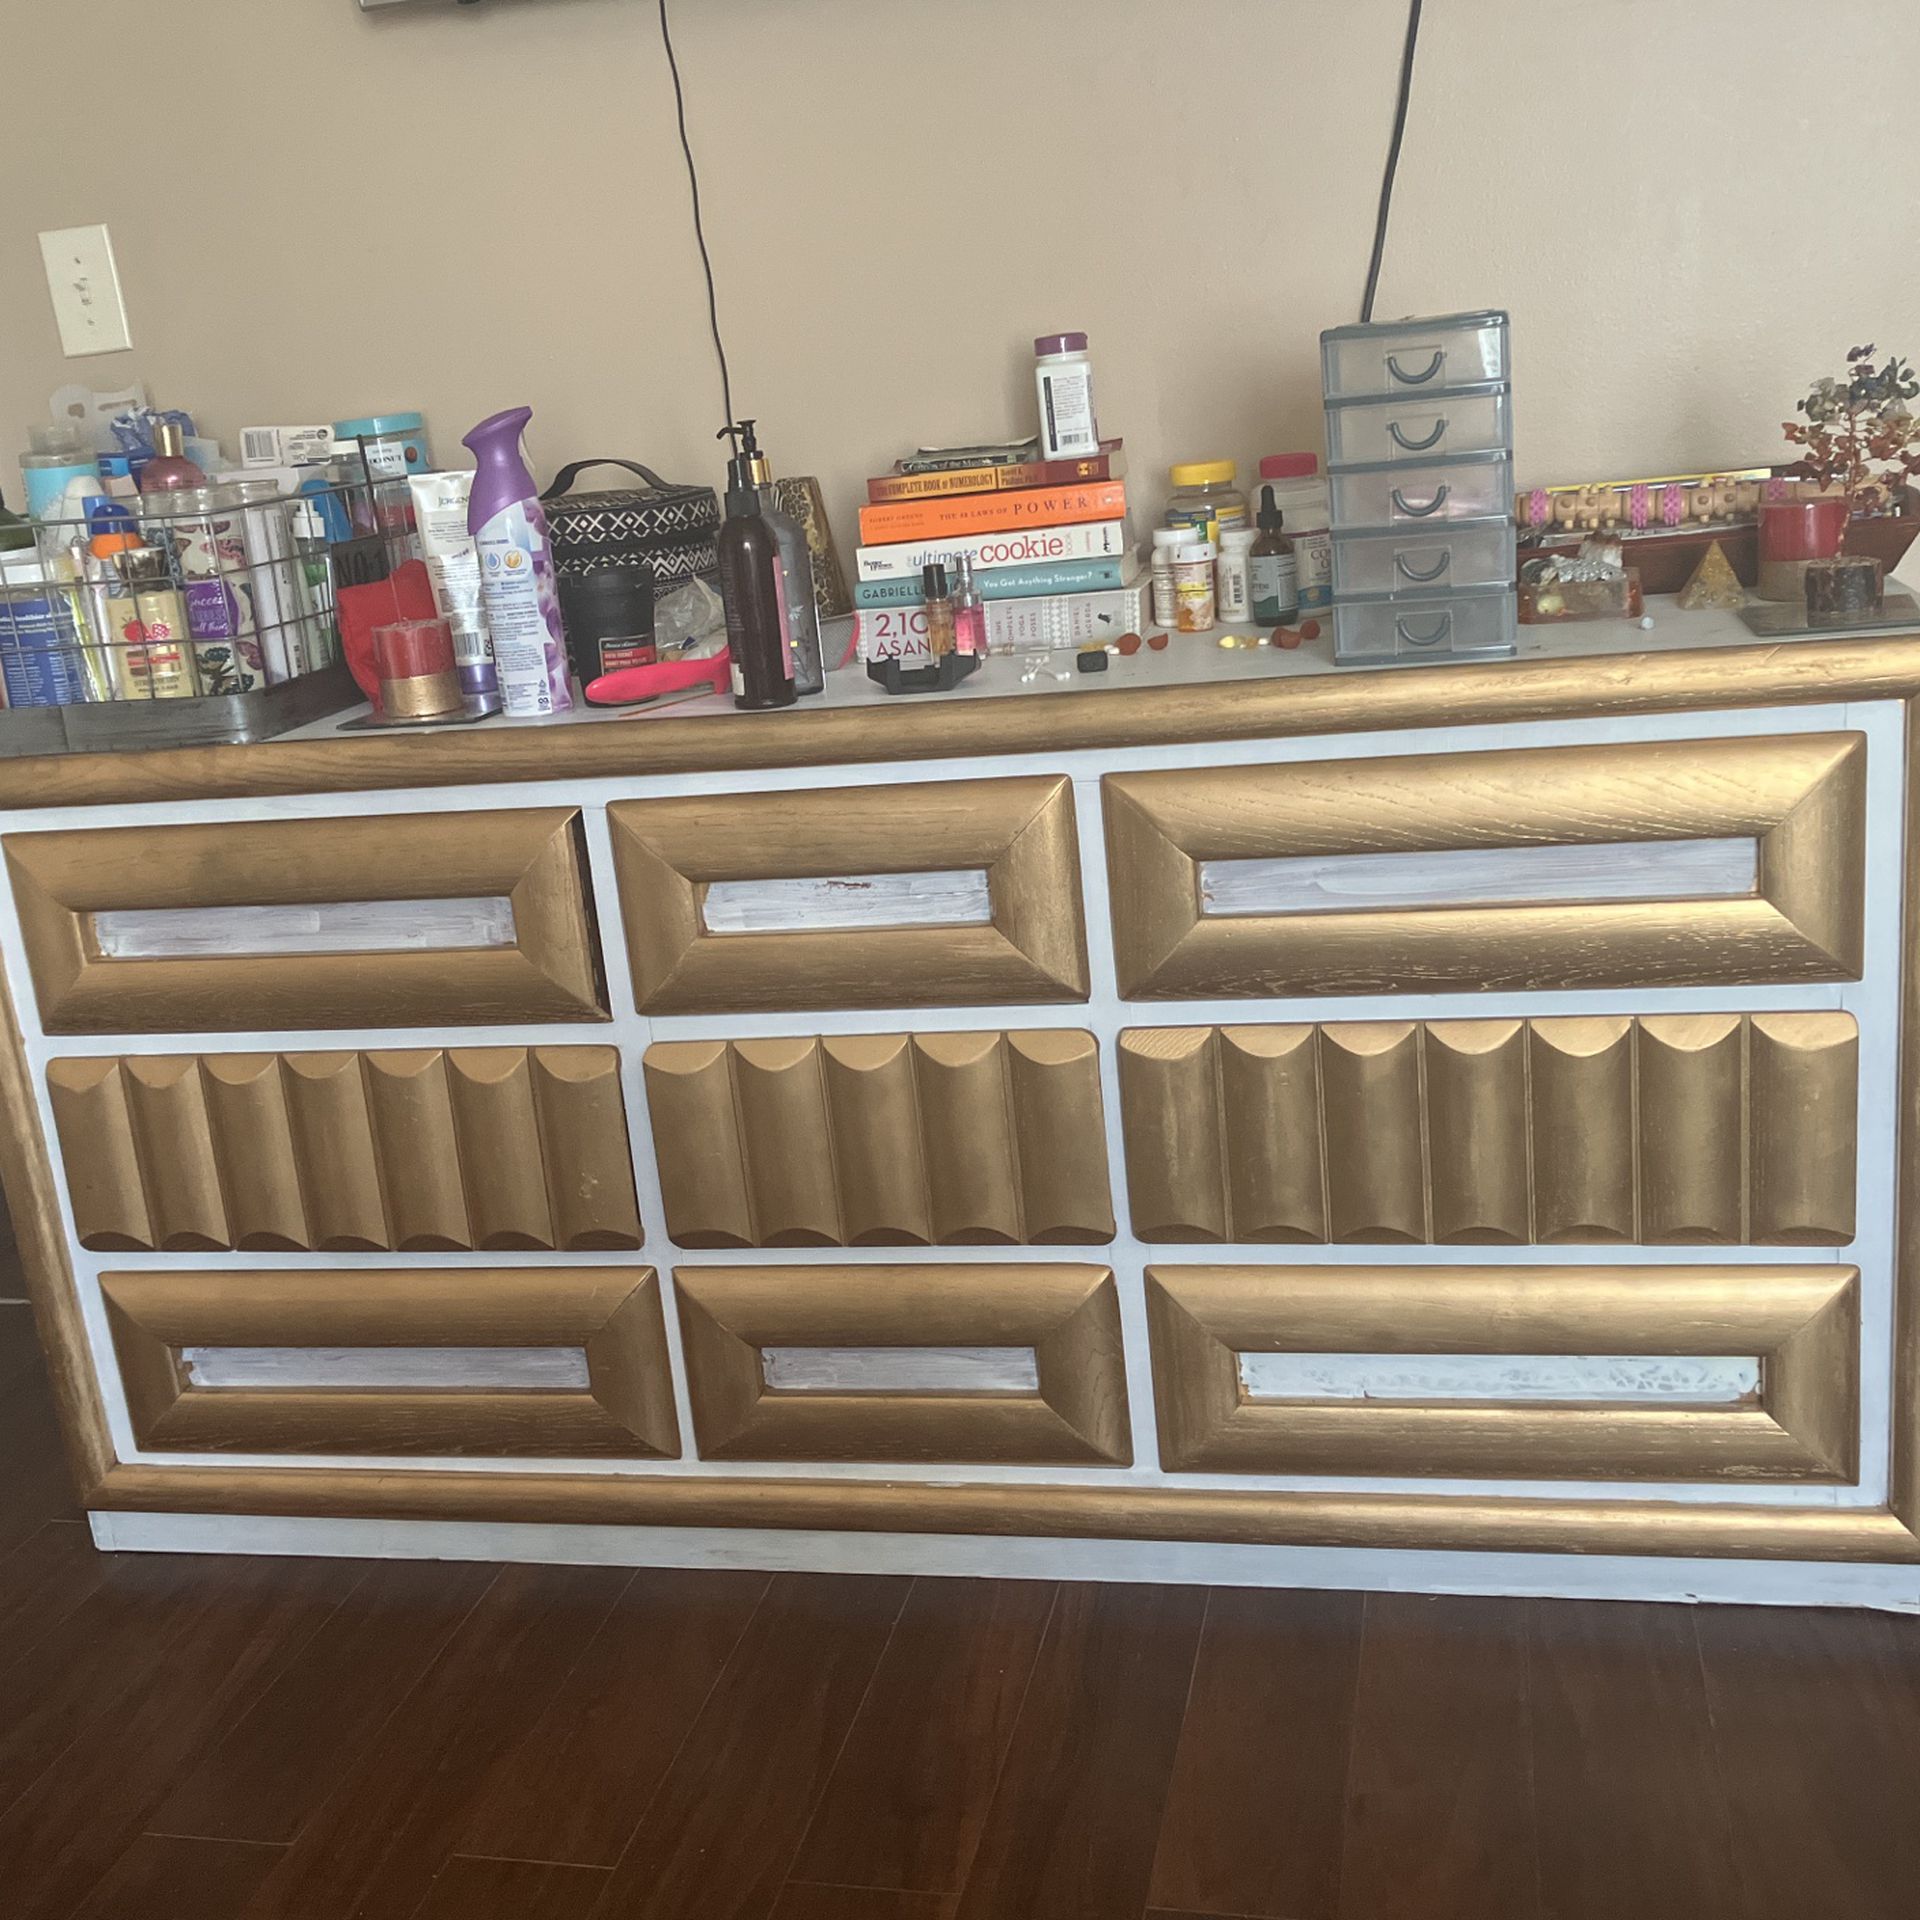 Painted wooden dresser